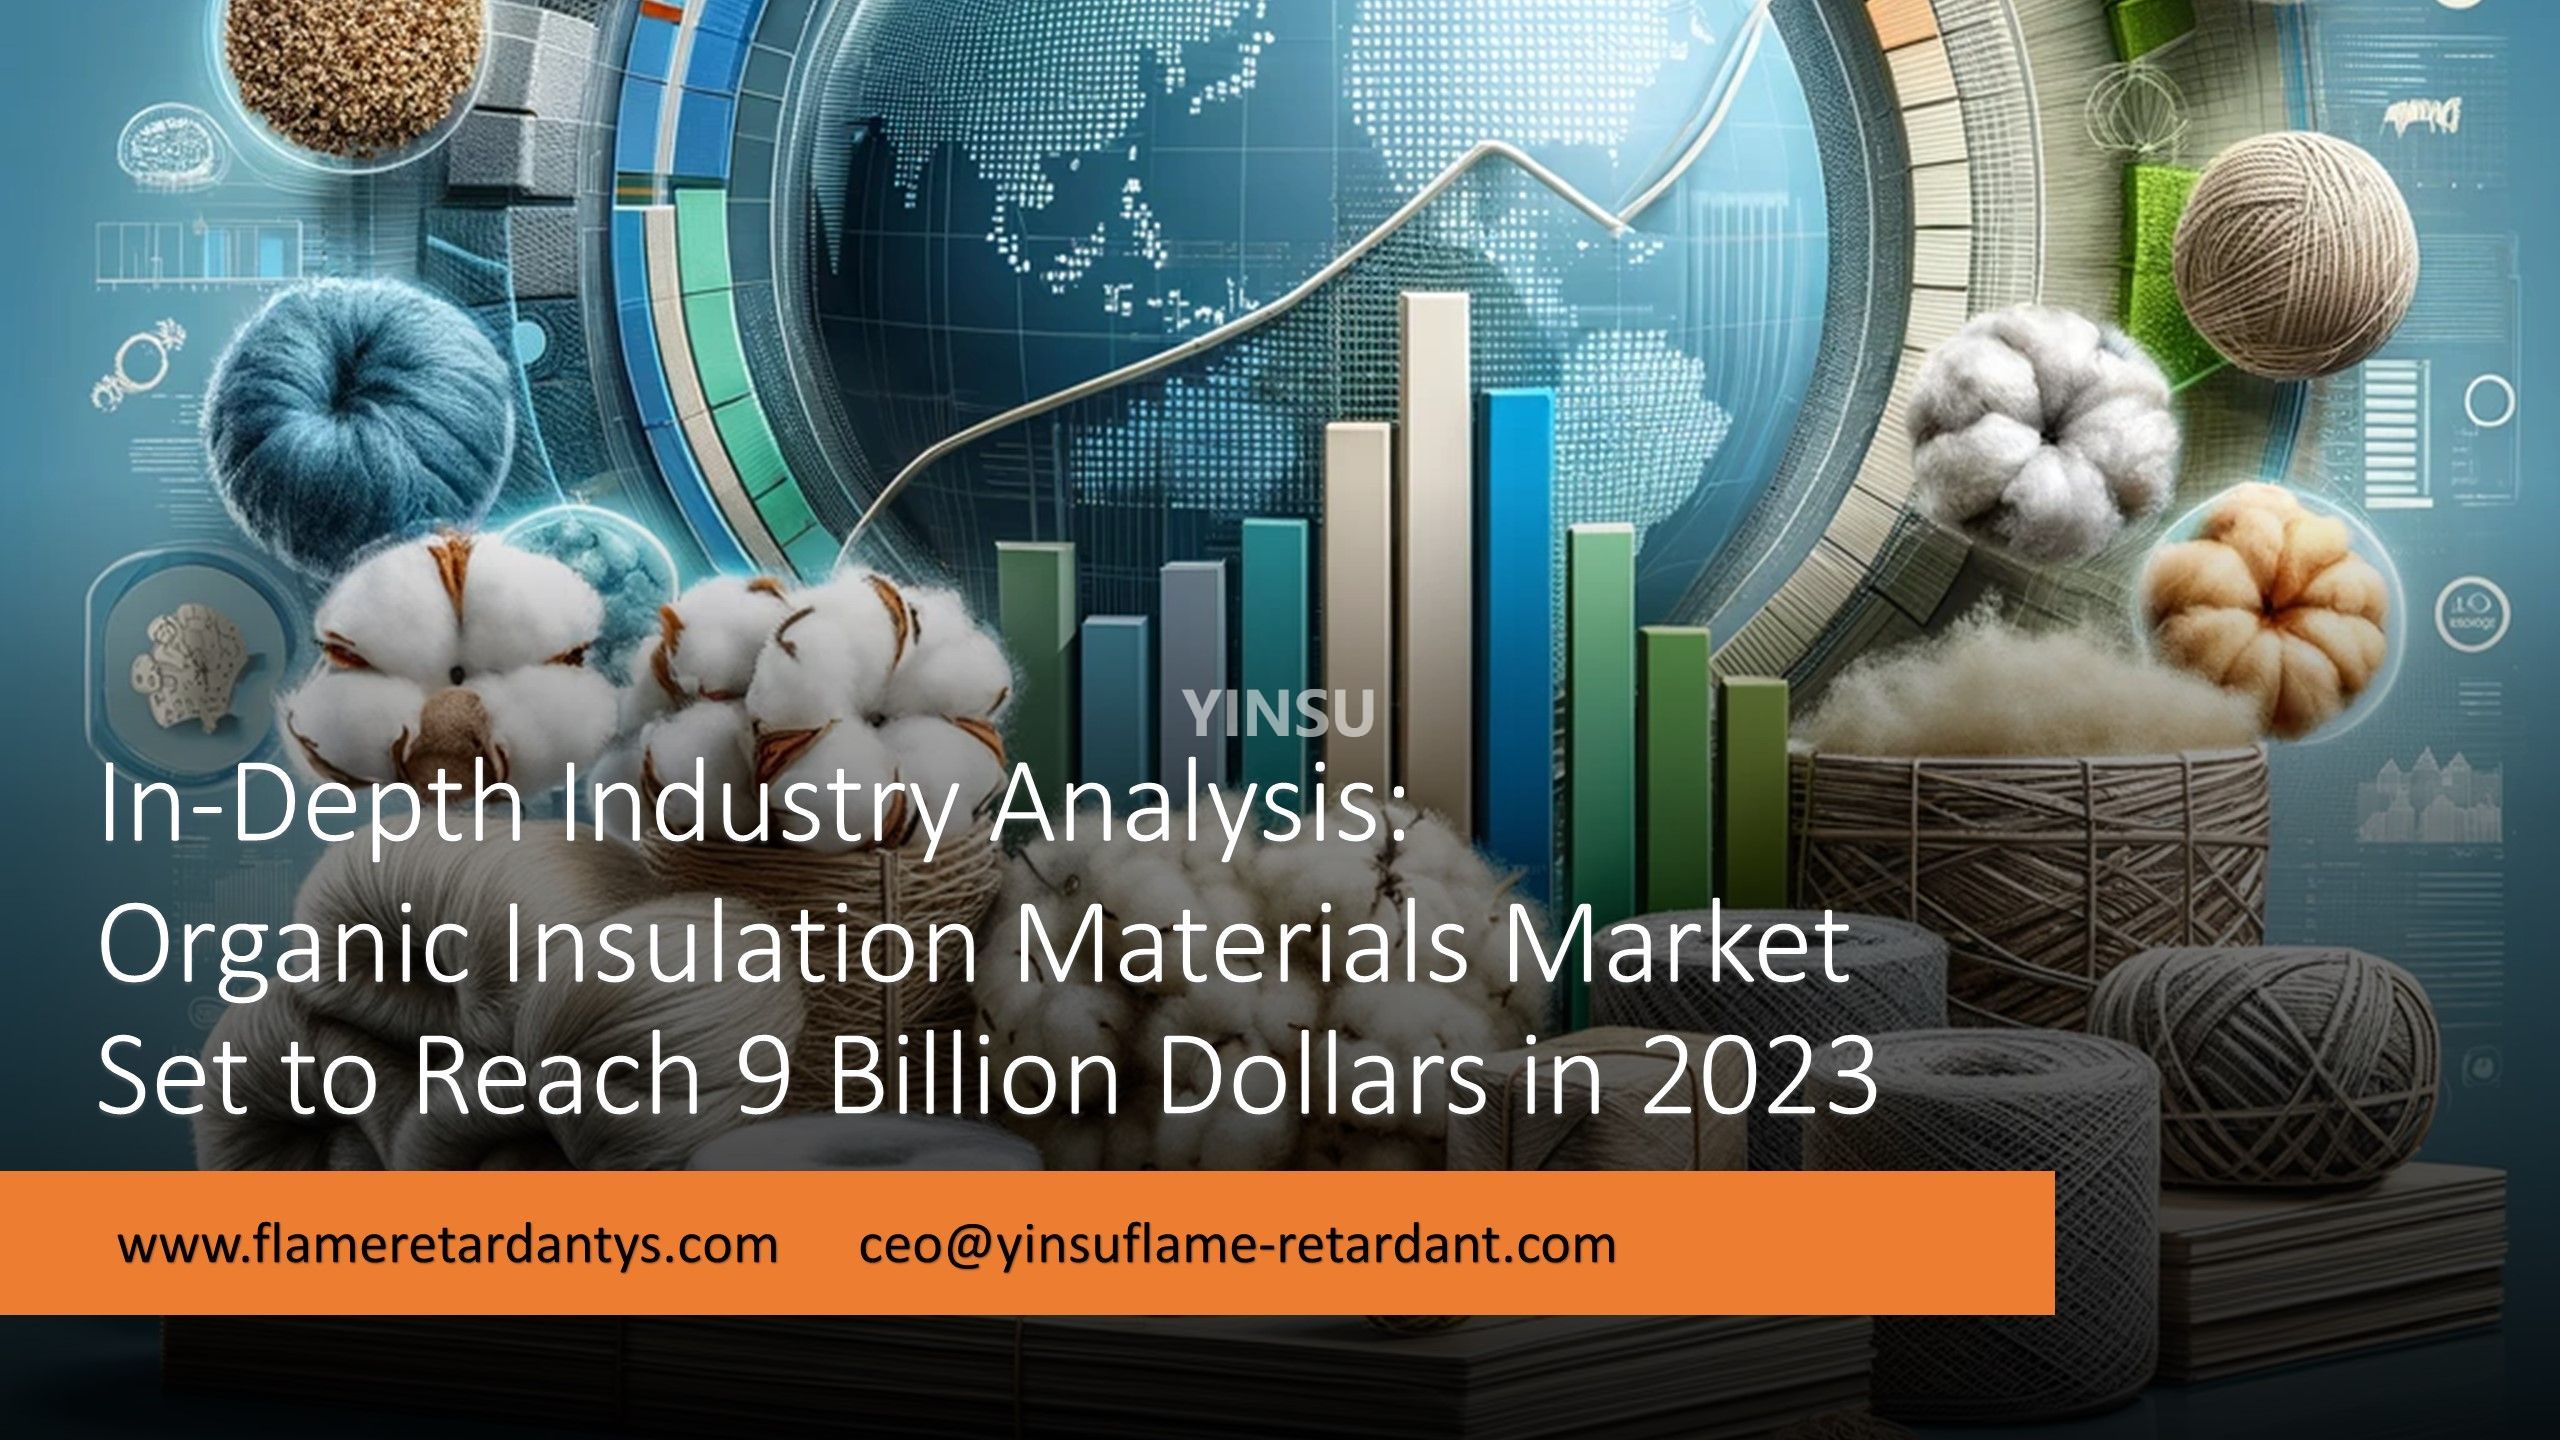 3.5 In-Depth Industry Analysis Organic Insulation Materials Market Set to Reach 9 Billion Dollars in 2023